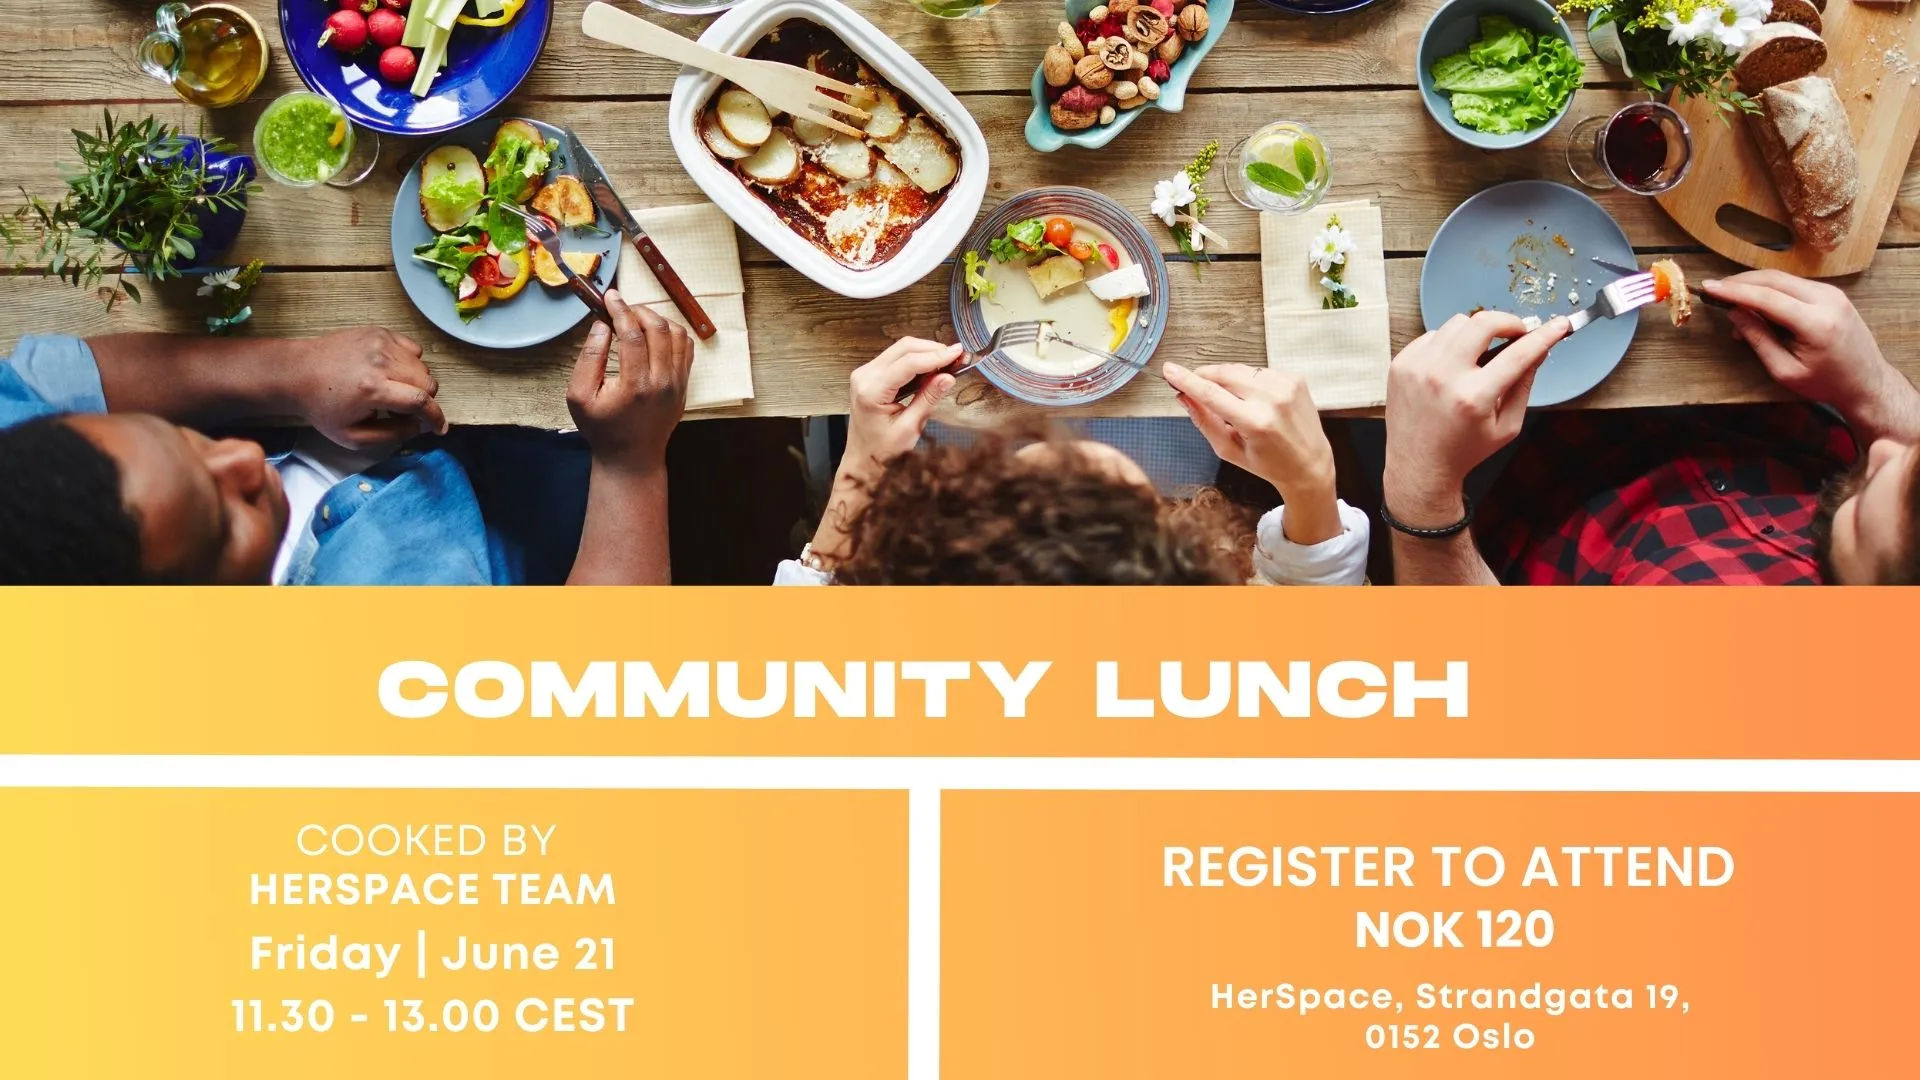 Community Lunch Invite Poster